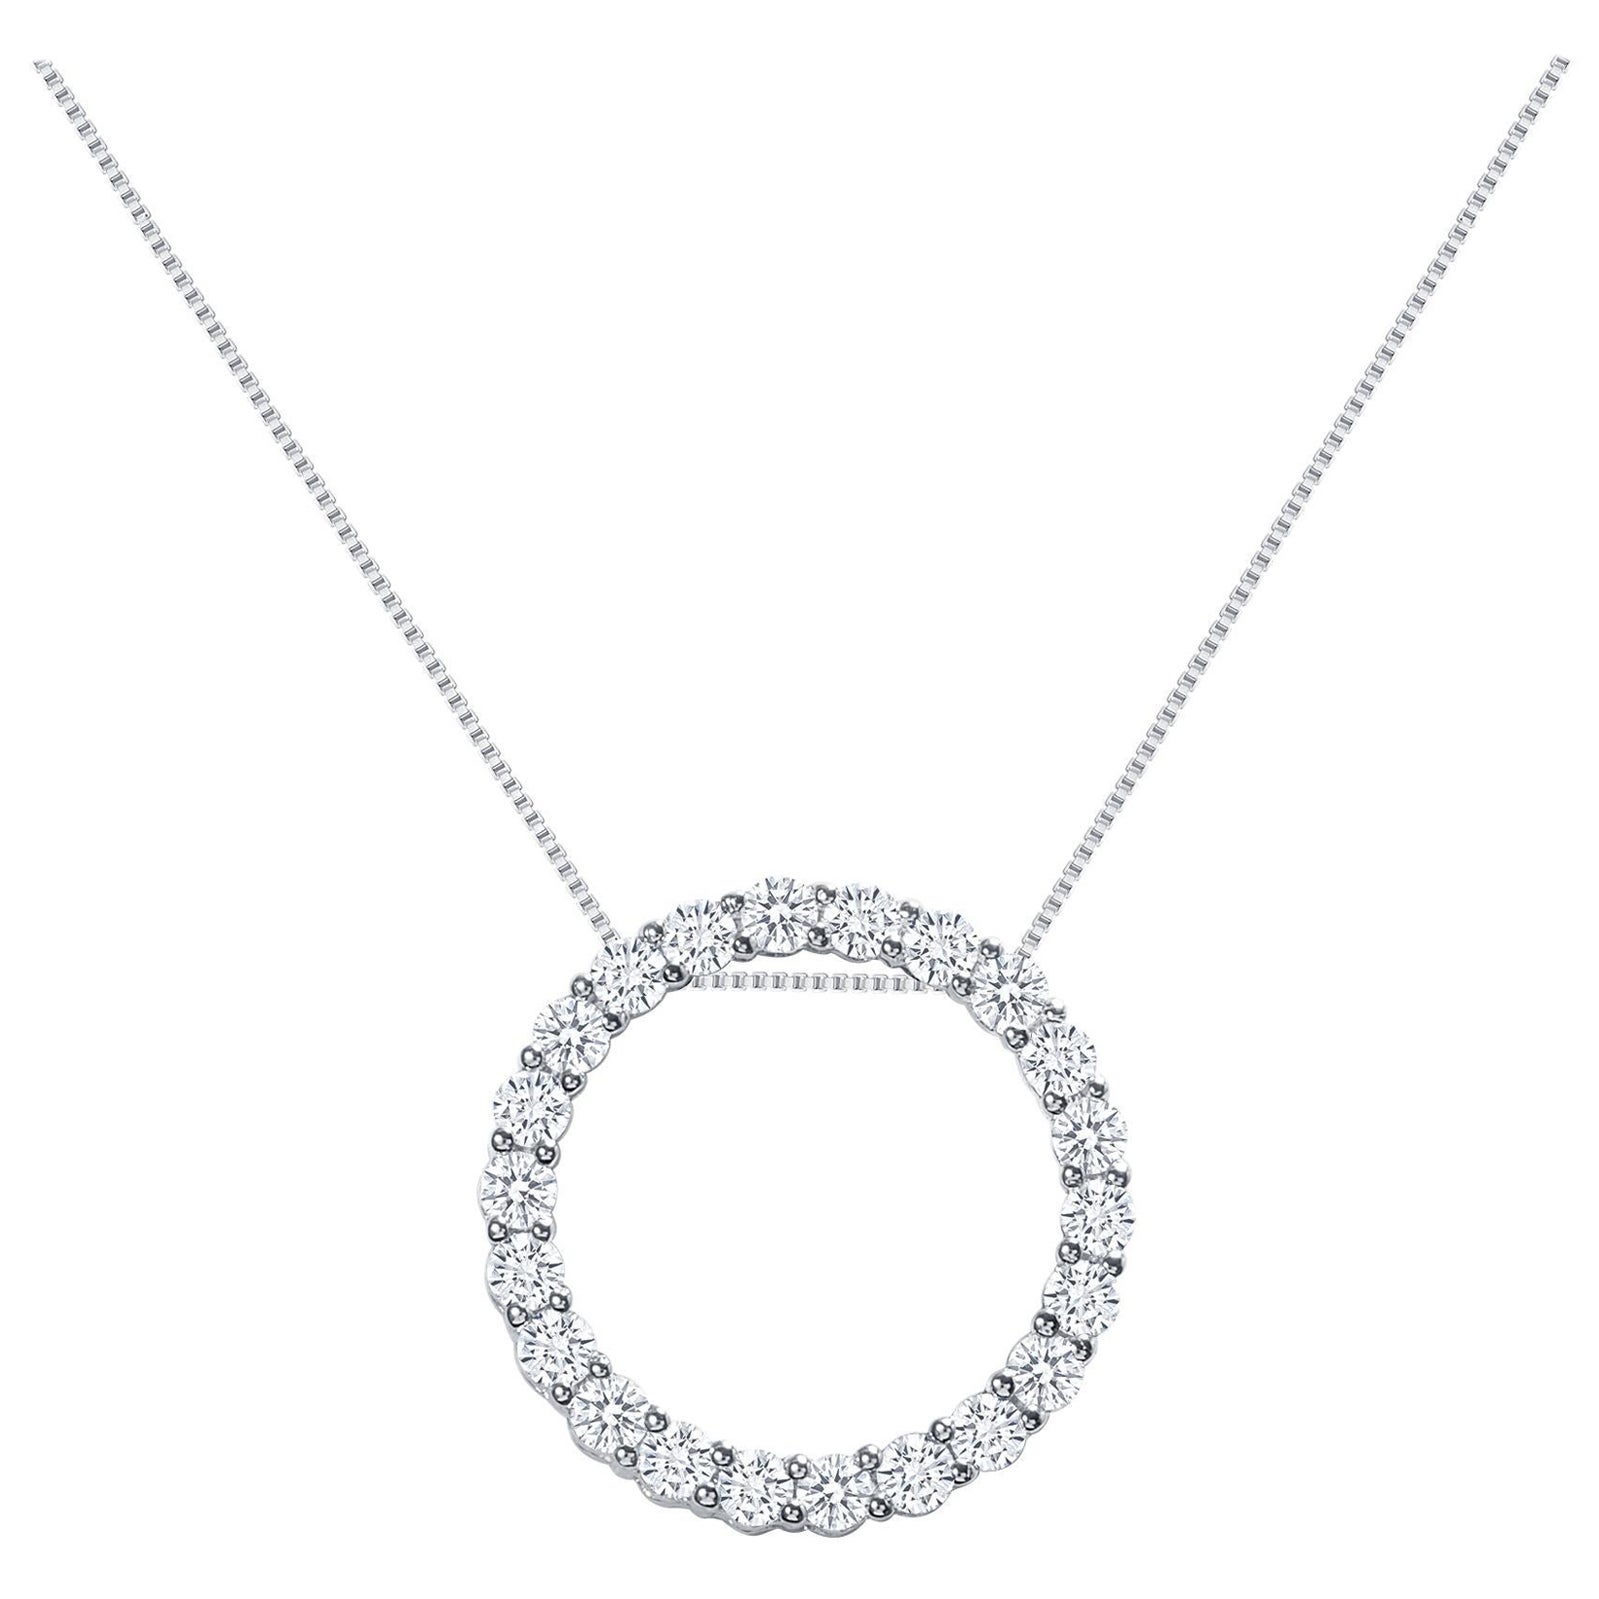 Collier pendentif circulaire en or blanc 14 carats avec diamants de 1 carat